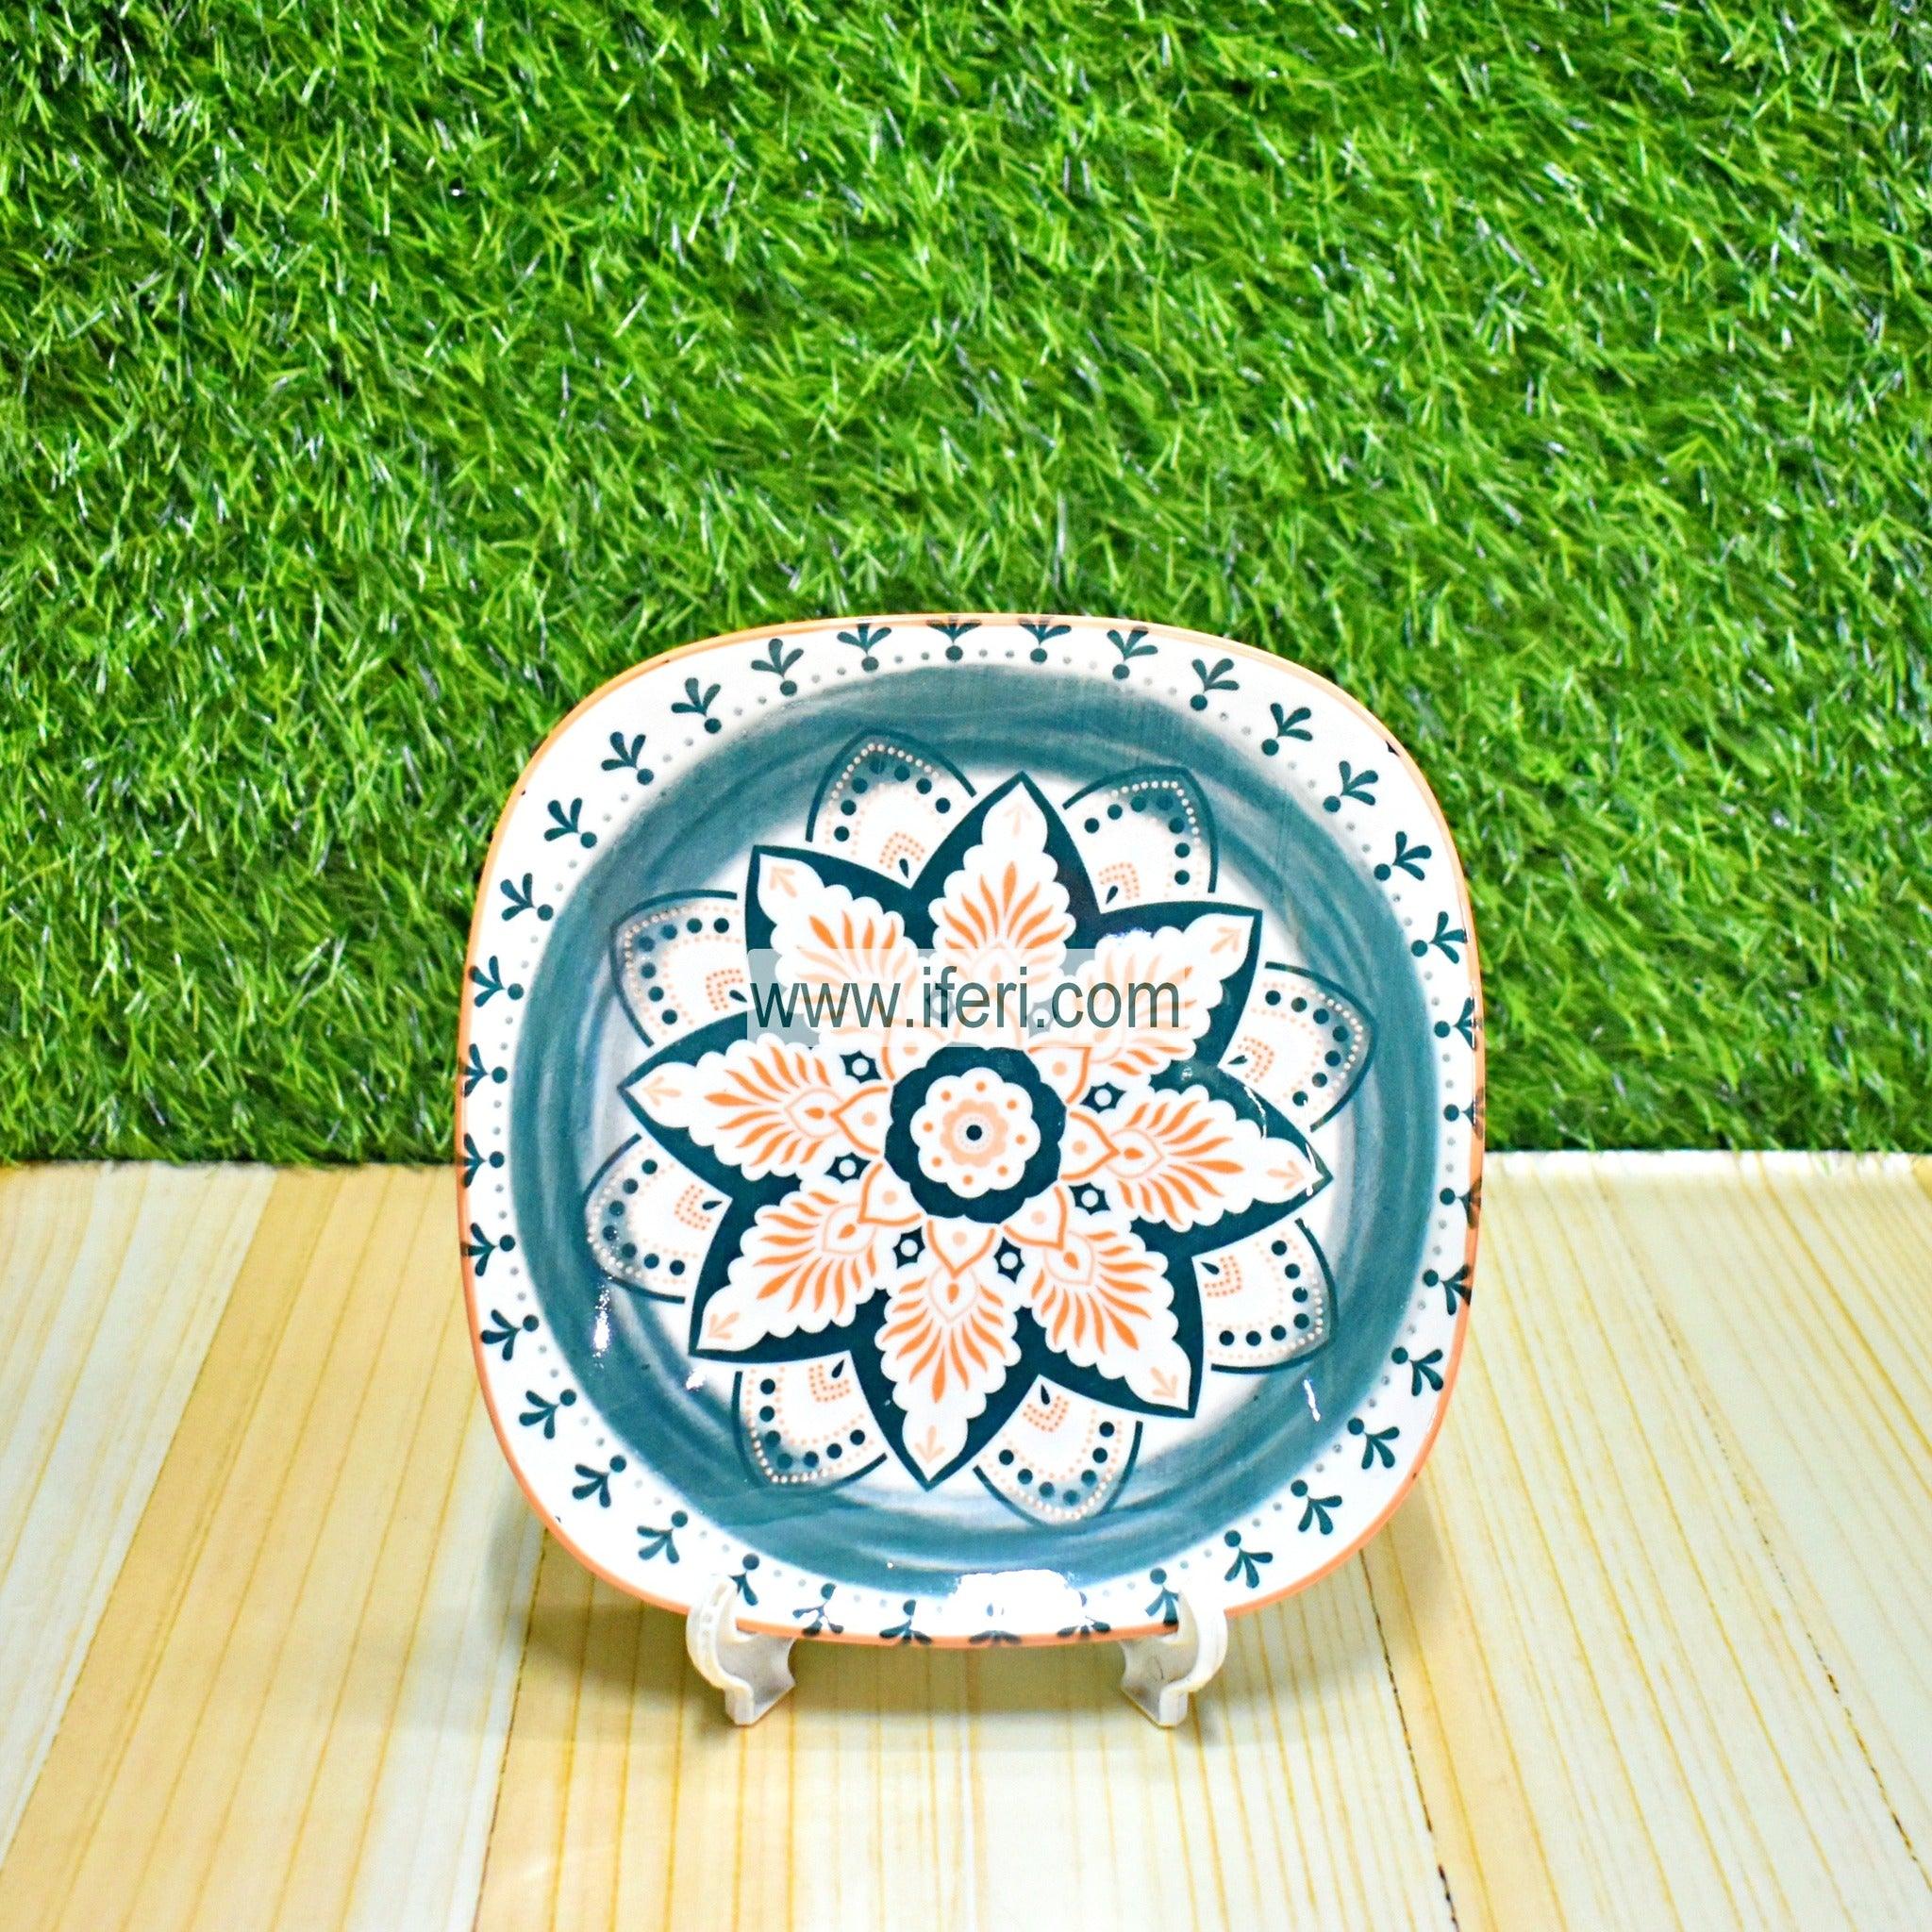 8 Inch Ceramic Half Plate SY0068 Price in Bangladesh - iferi.com